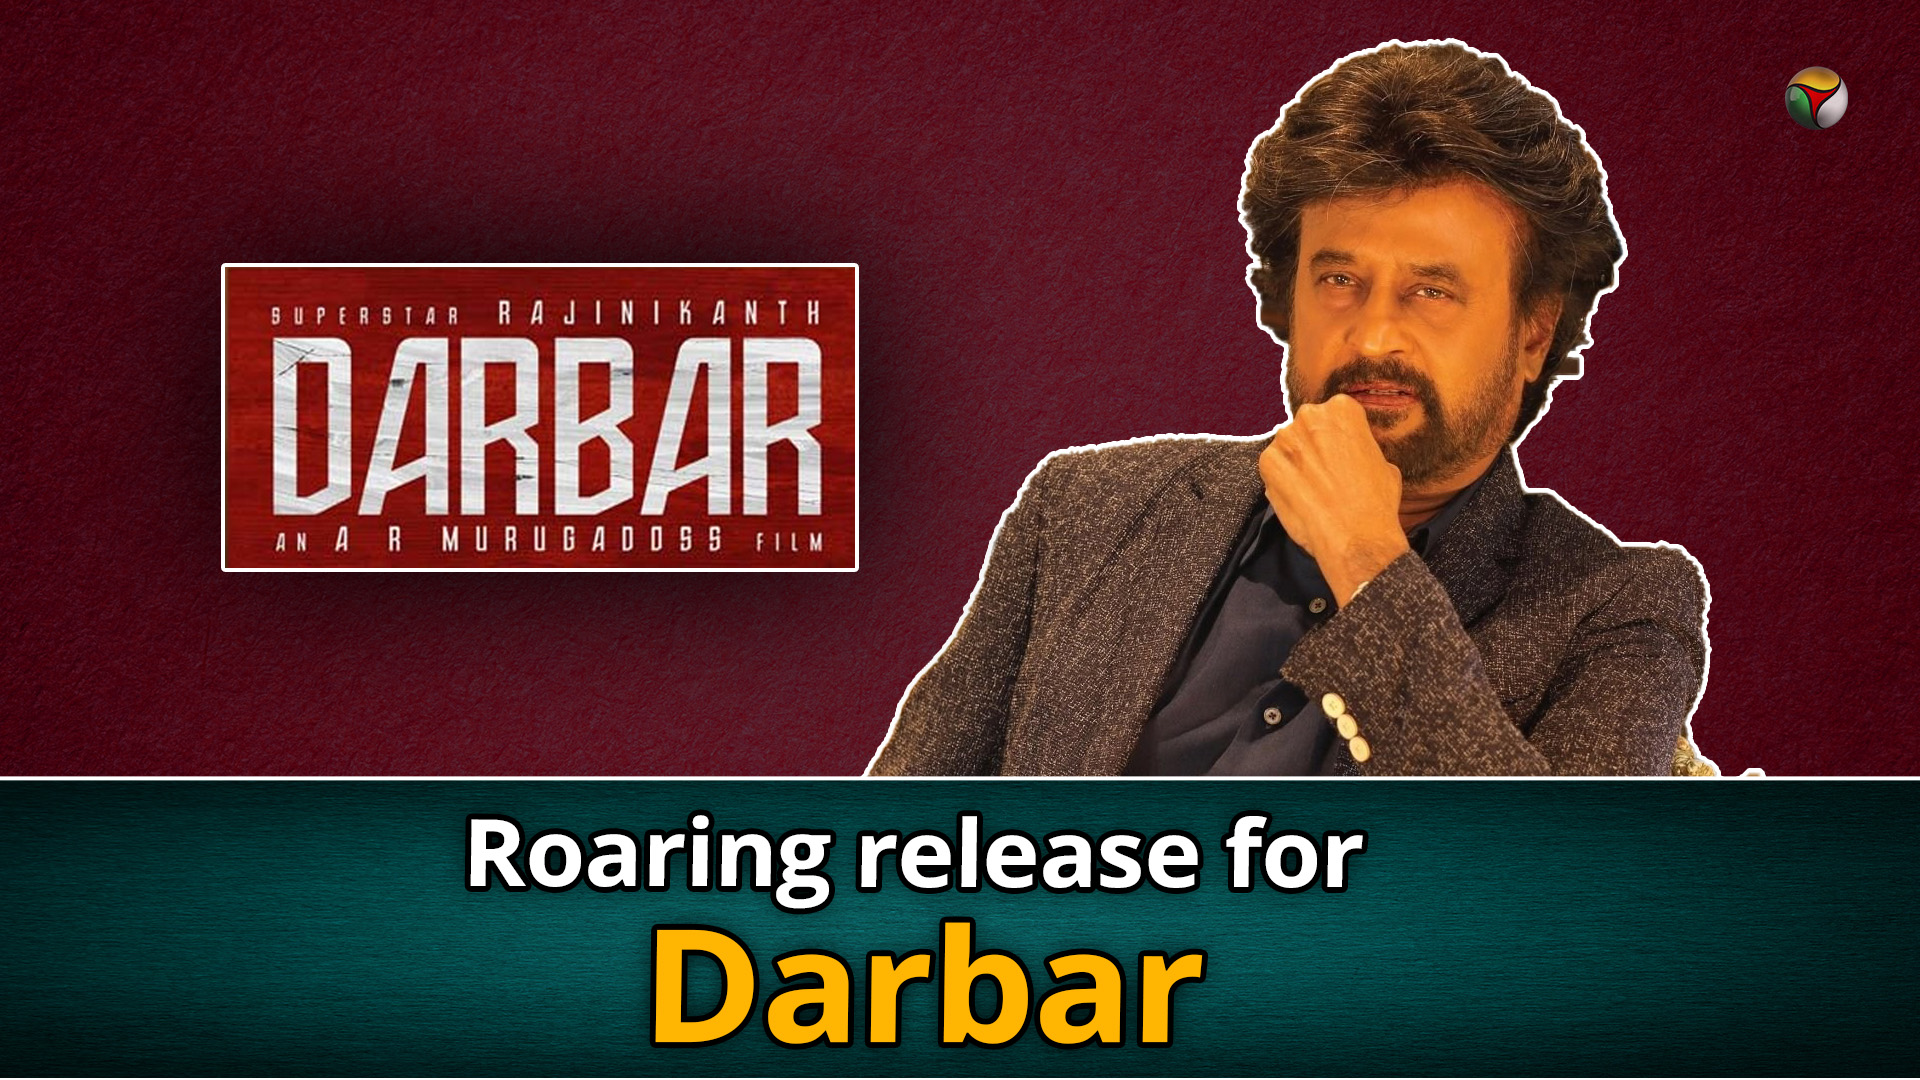 Roaring release for Darbar